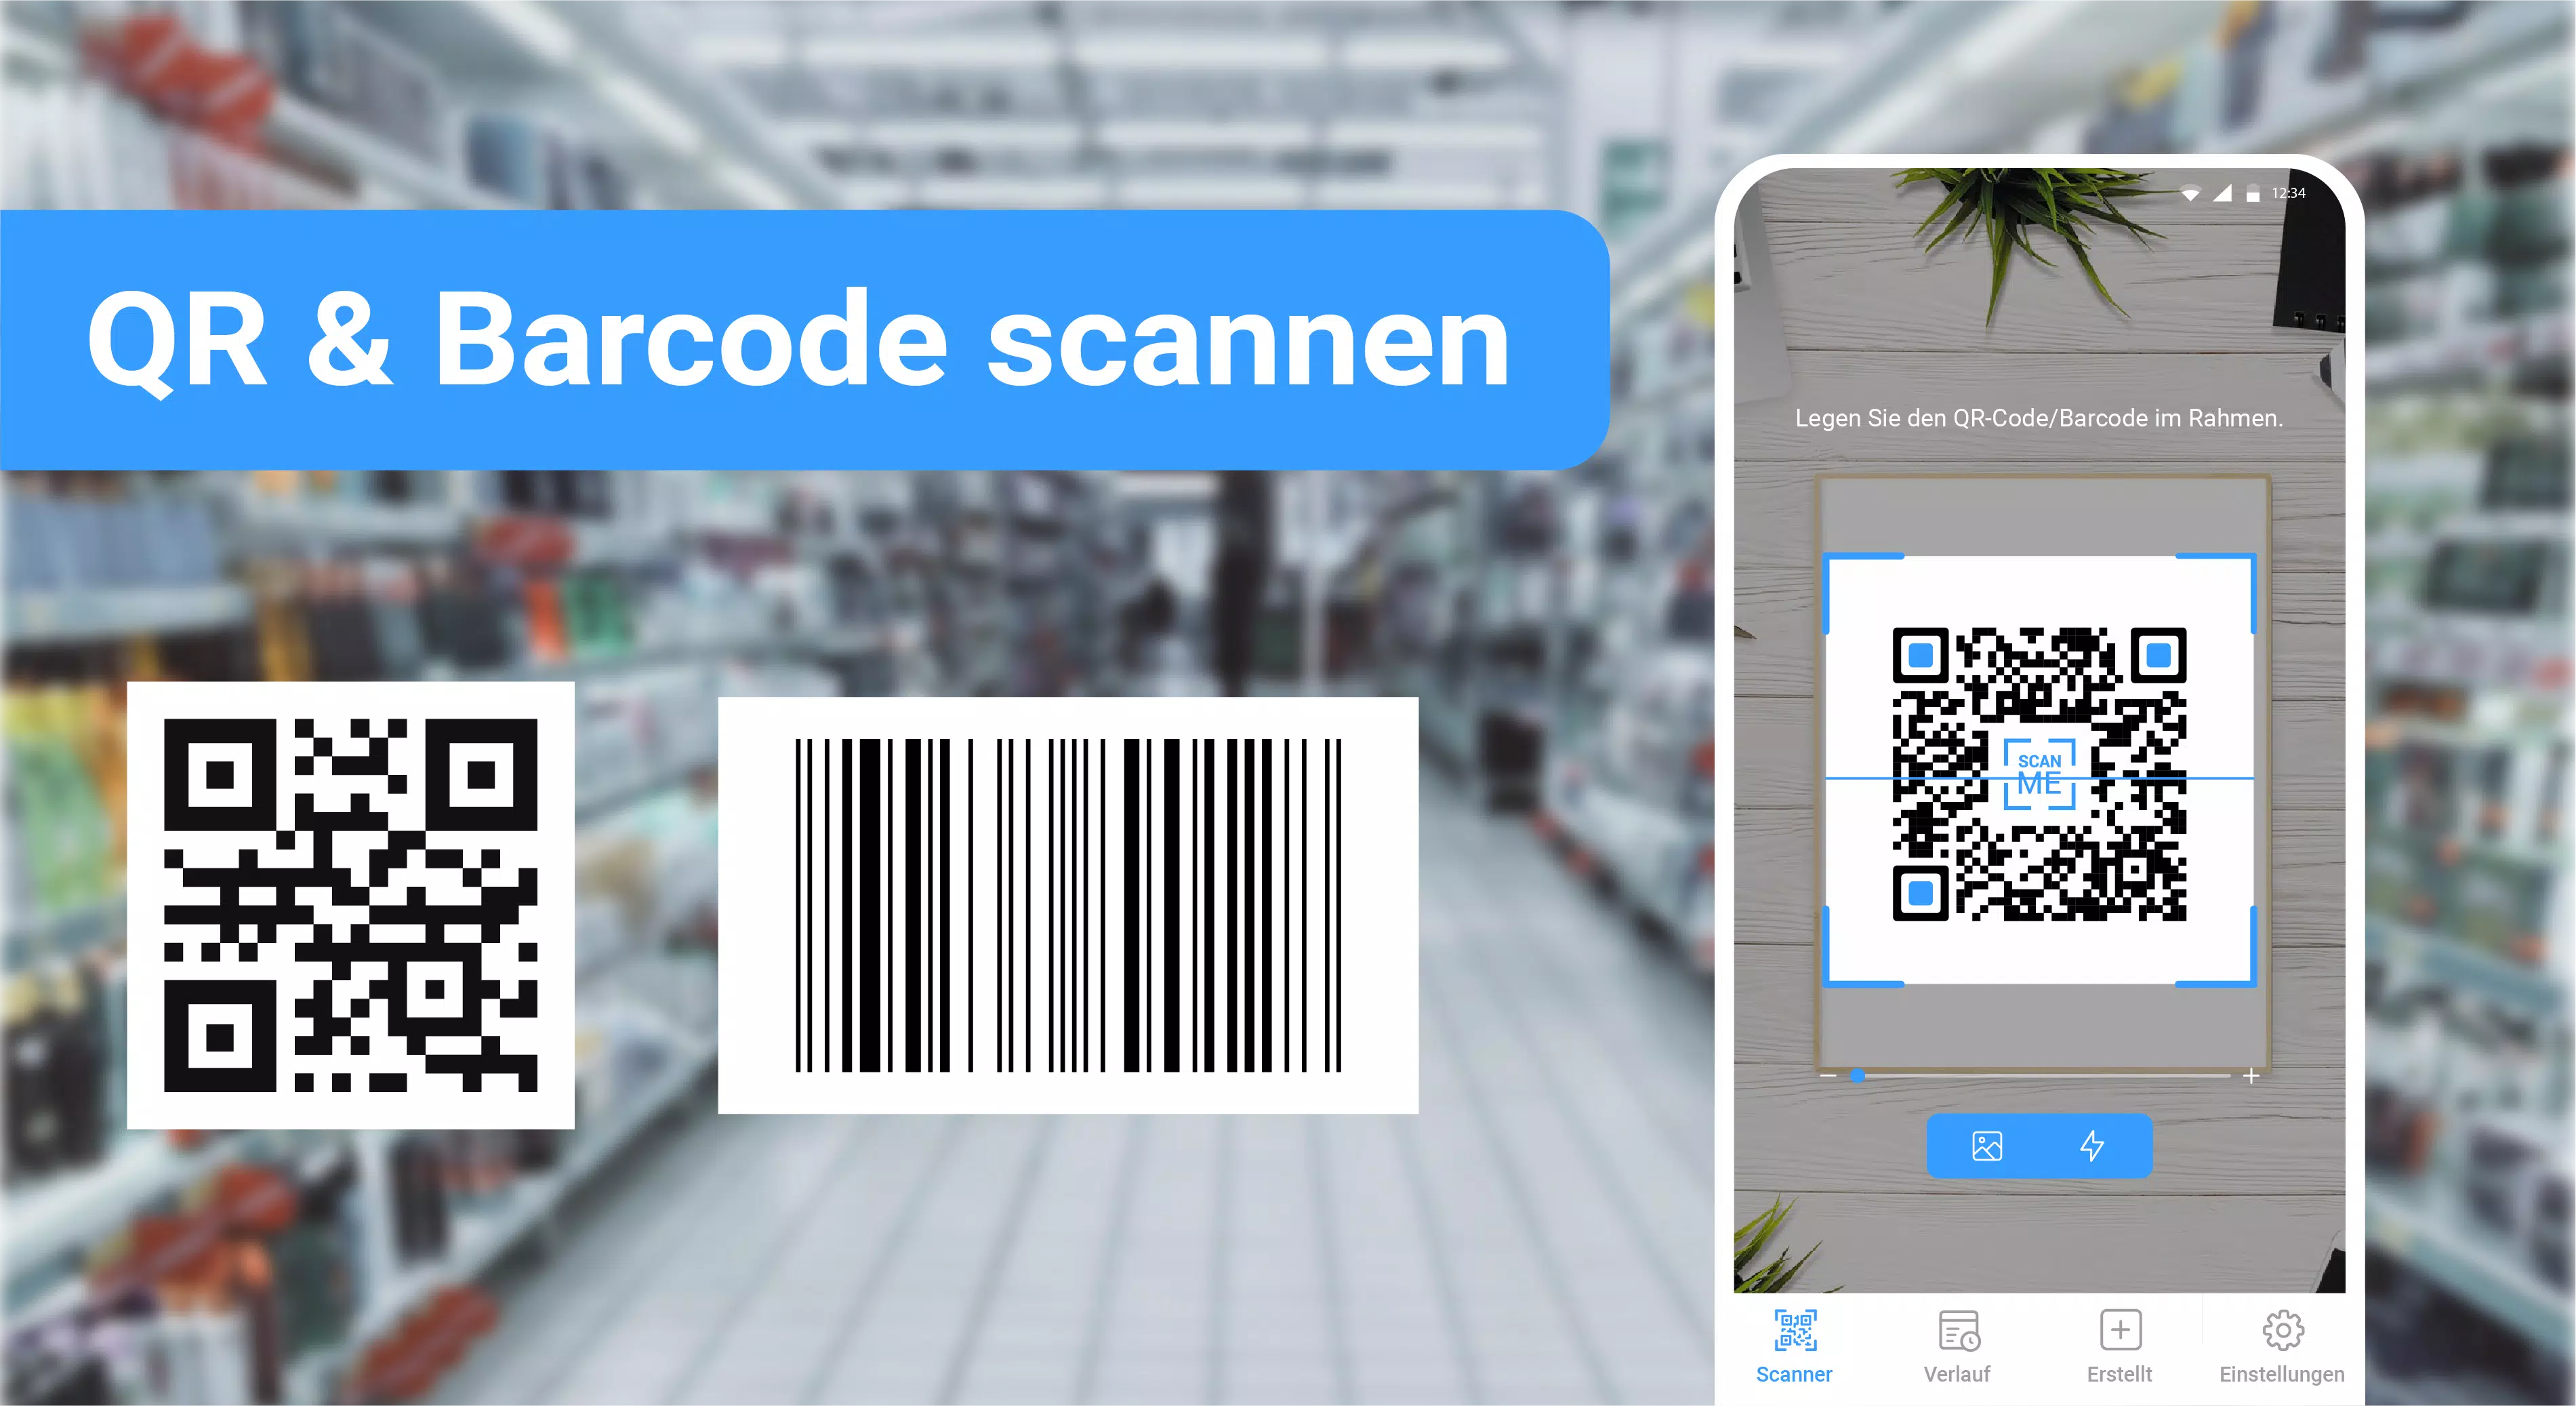 QR scanner : QR code & barcode reader for Android - APK Download